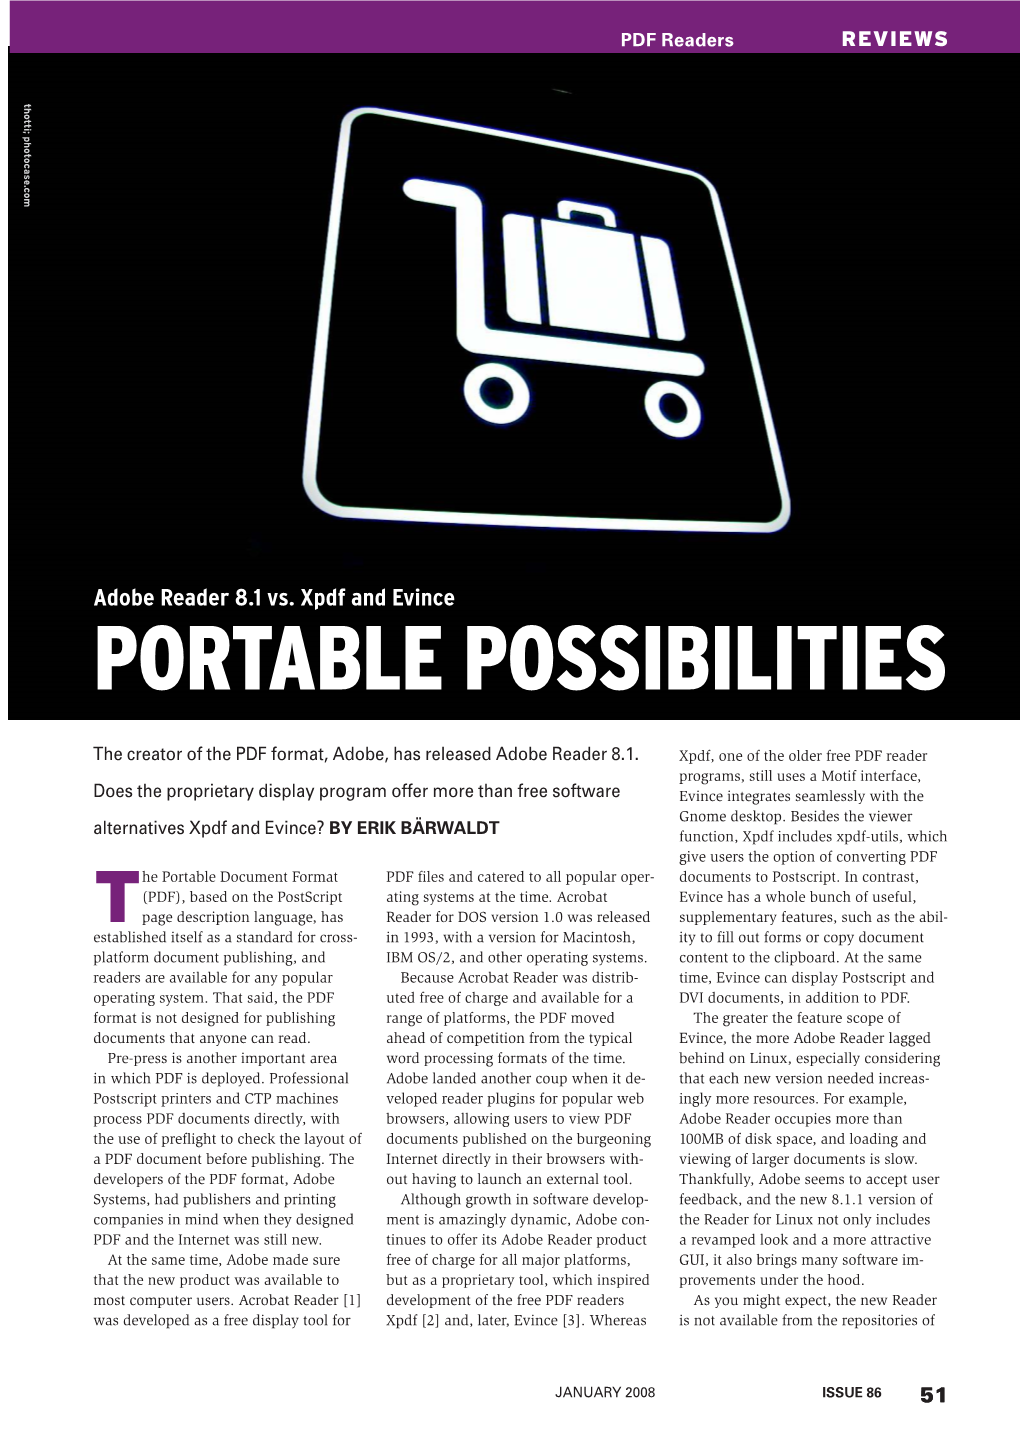 Portable Possibilities